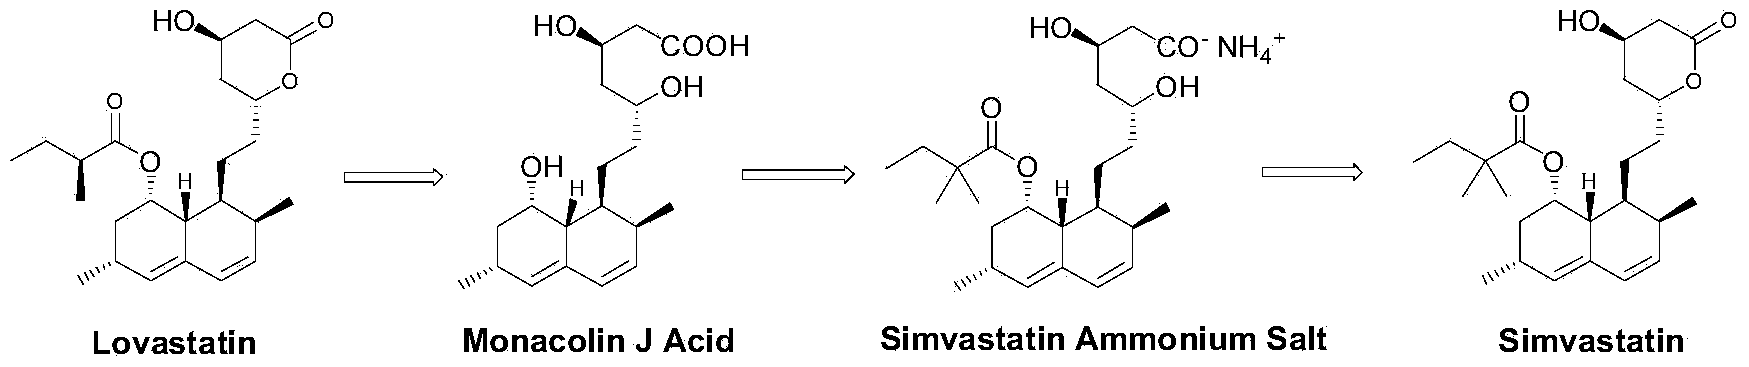 Preparation method of simvastatin ammonium salt